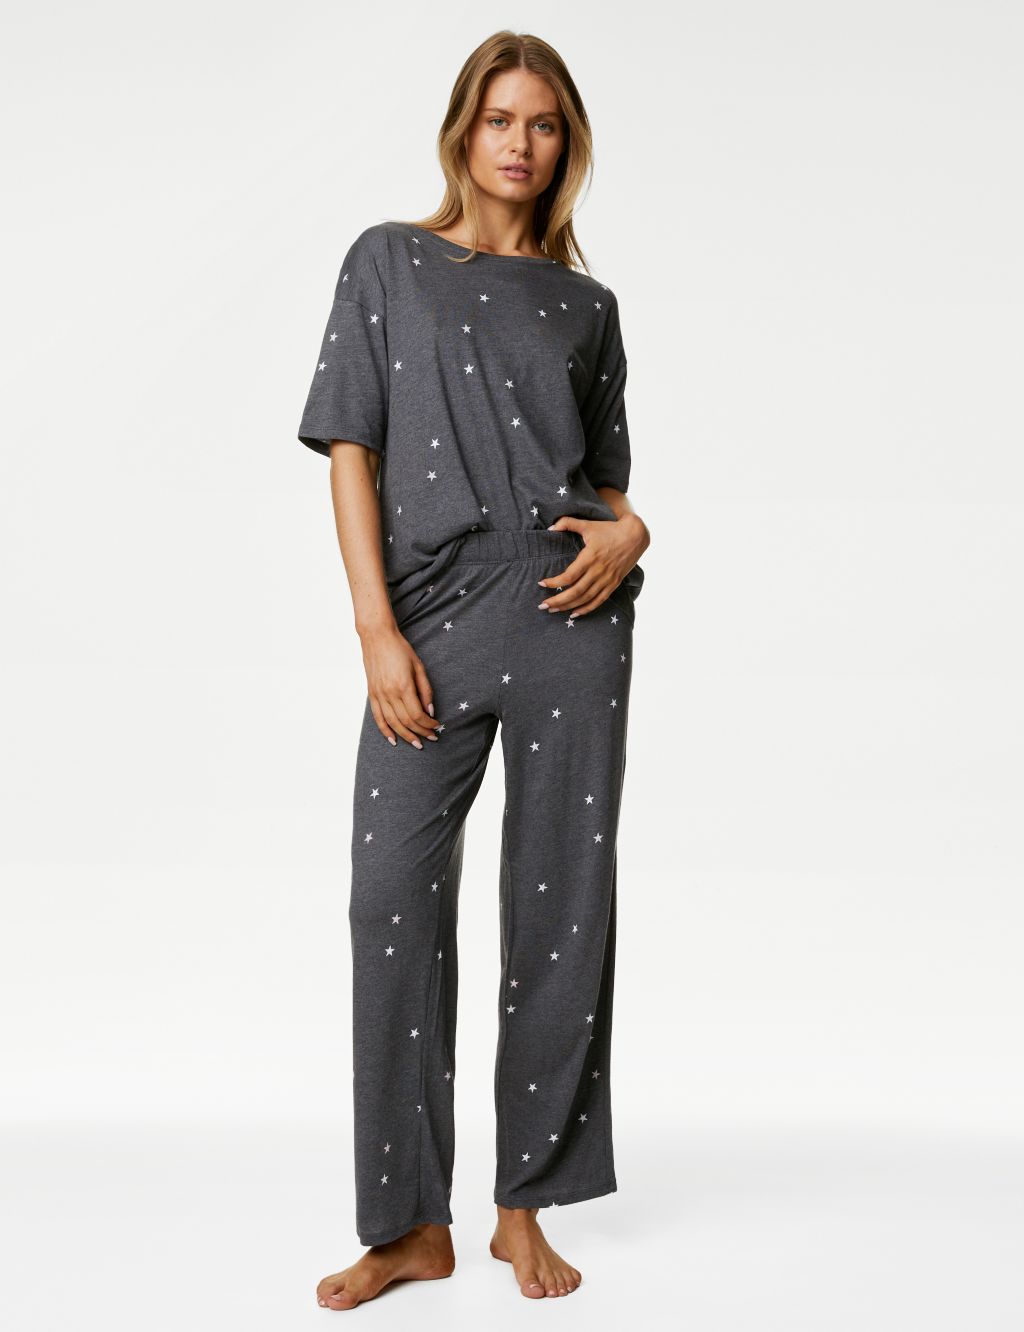 Cotton Modal Star Print Pyjama Set image 1